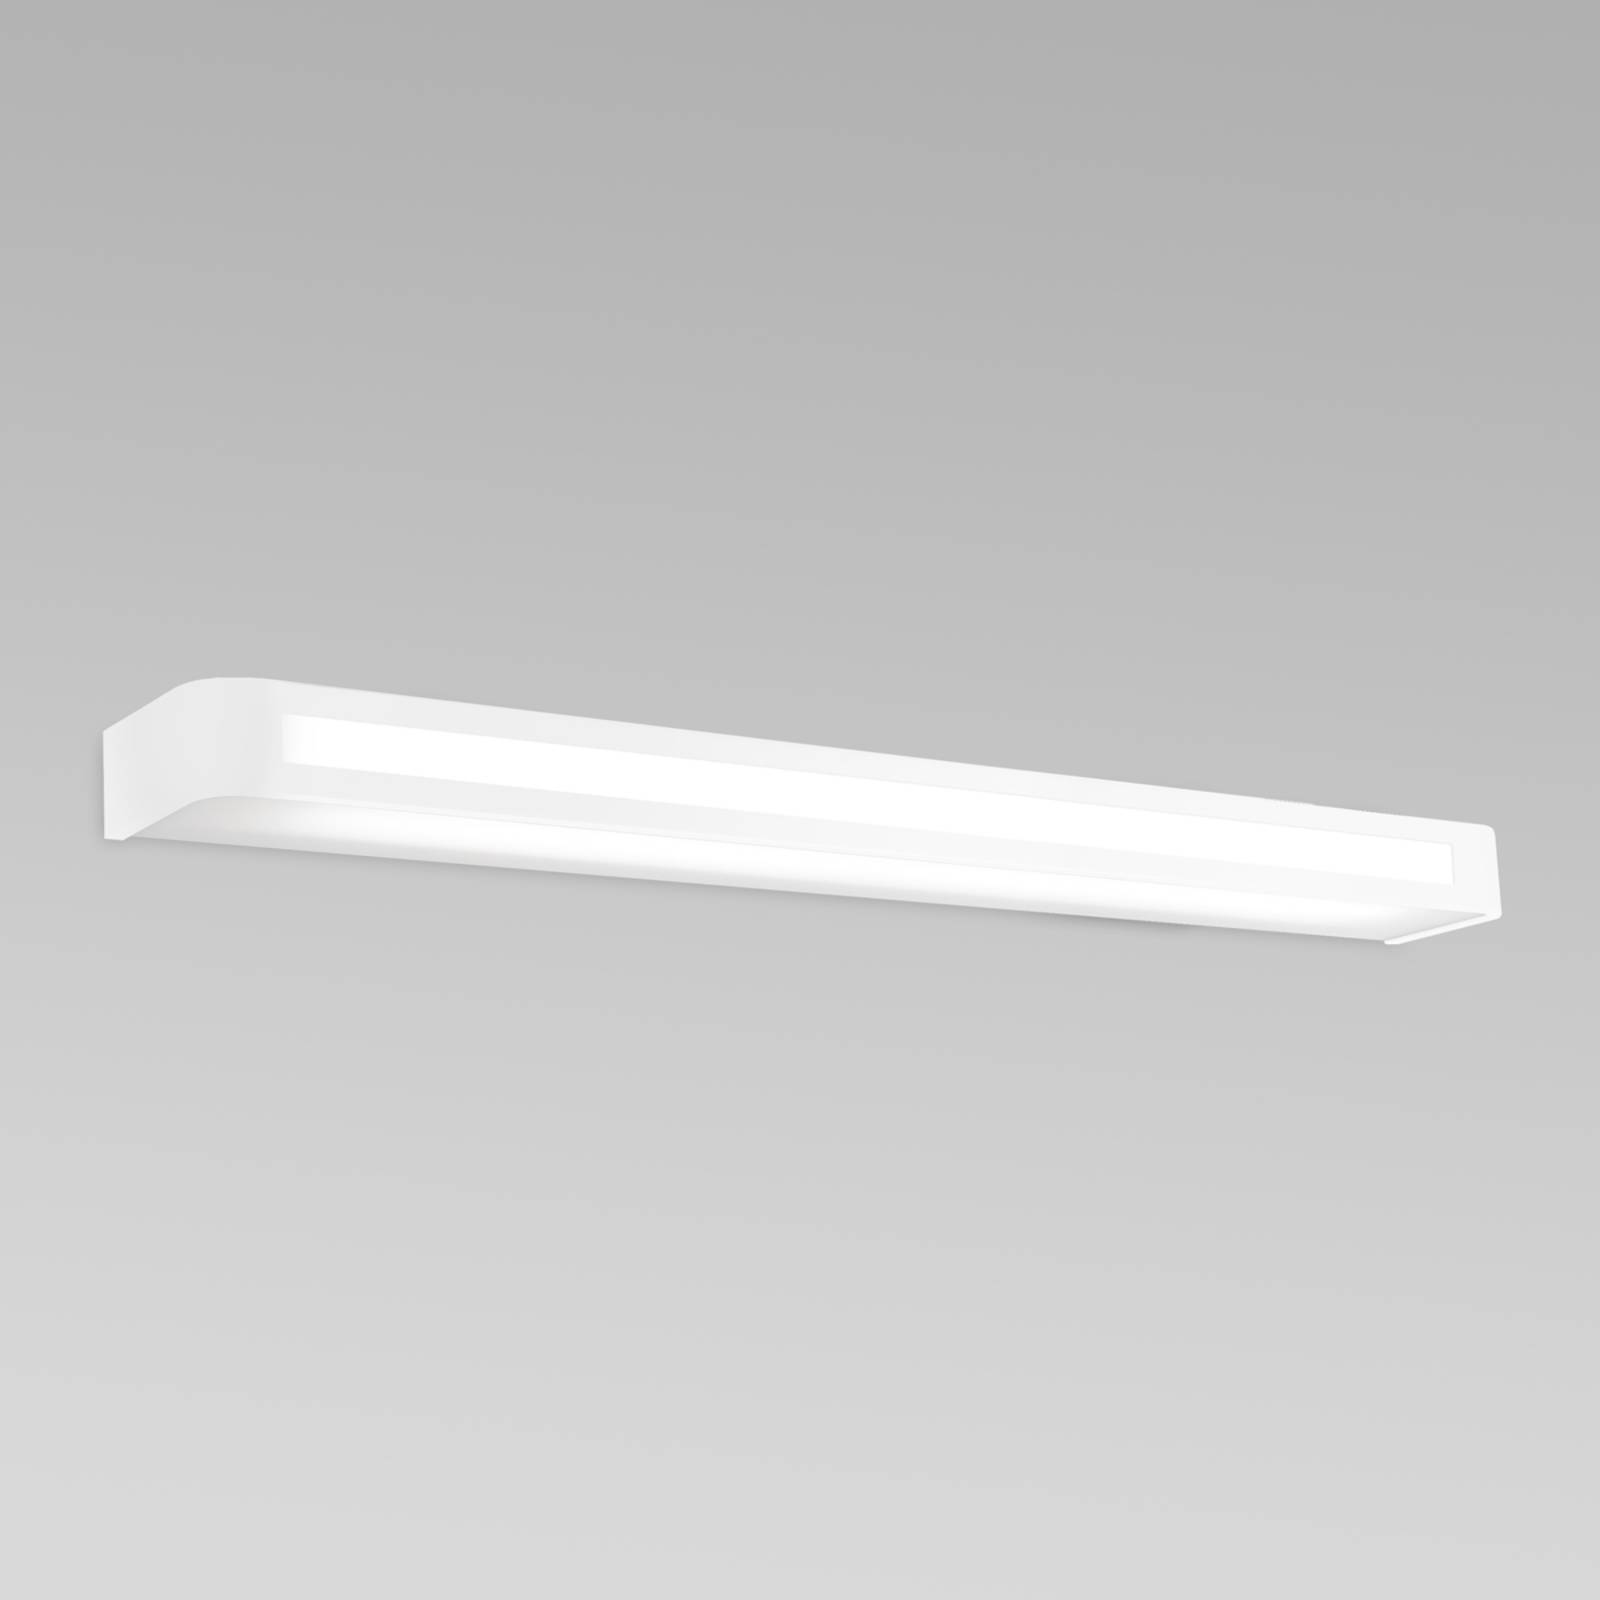 Pujol iluminación időtlen led fali lámpa arcos, ip20, 90 cm, fehér